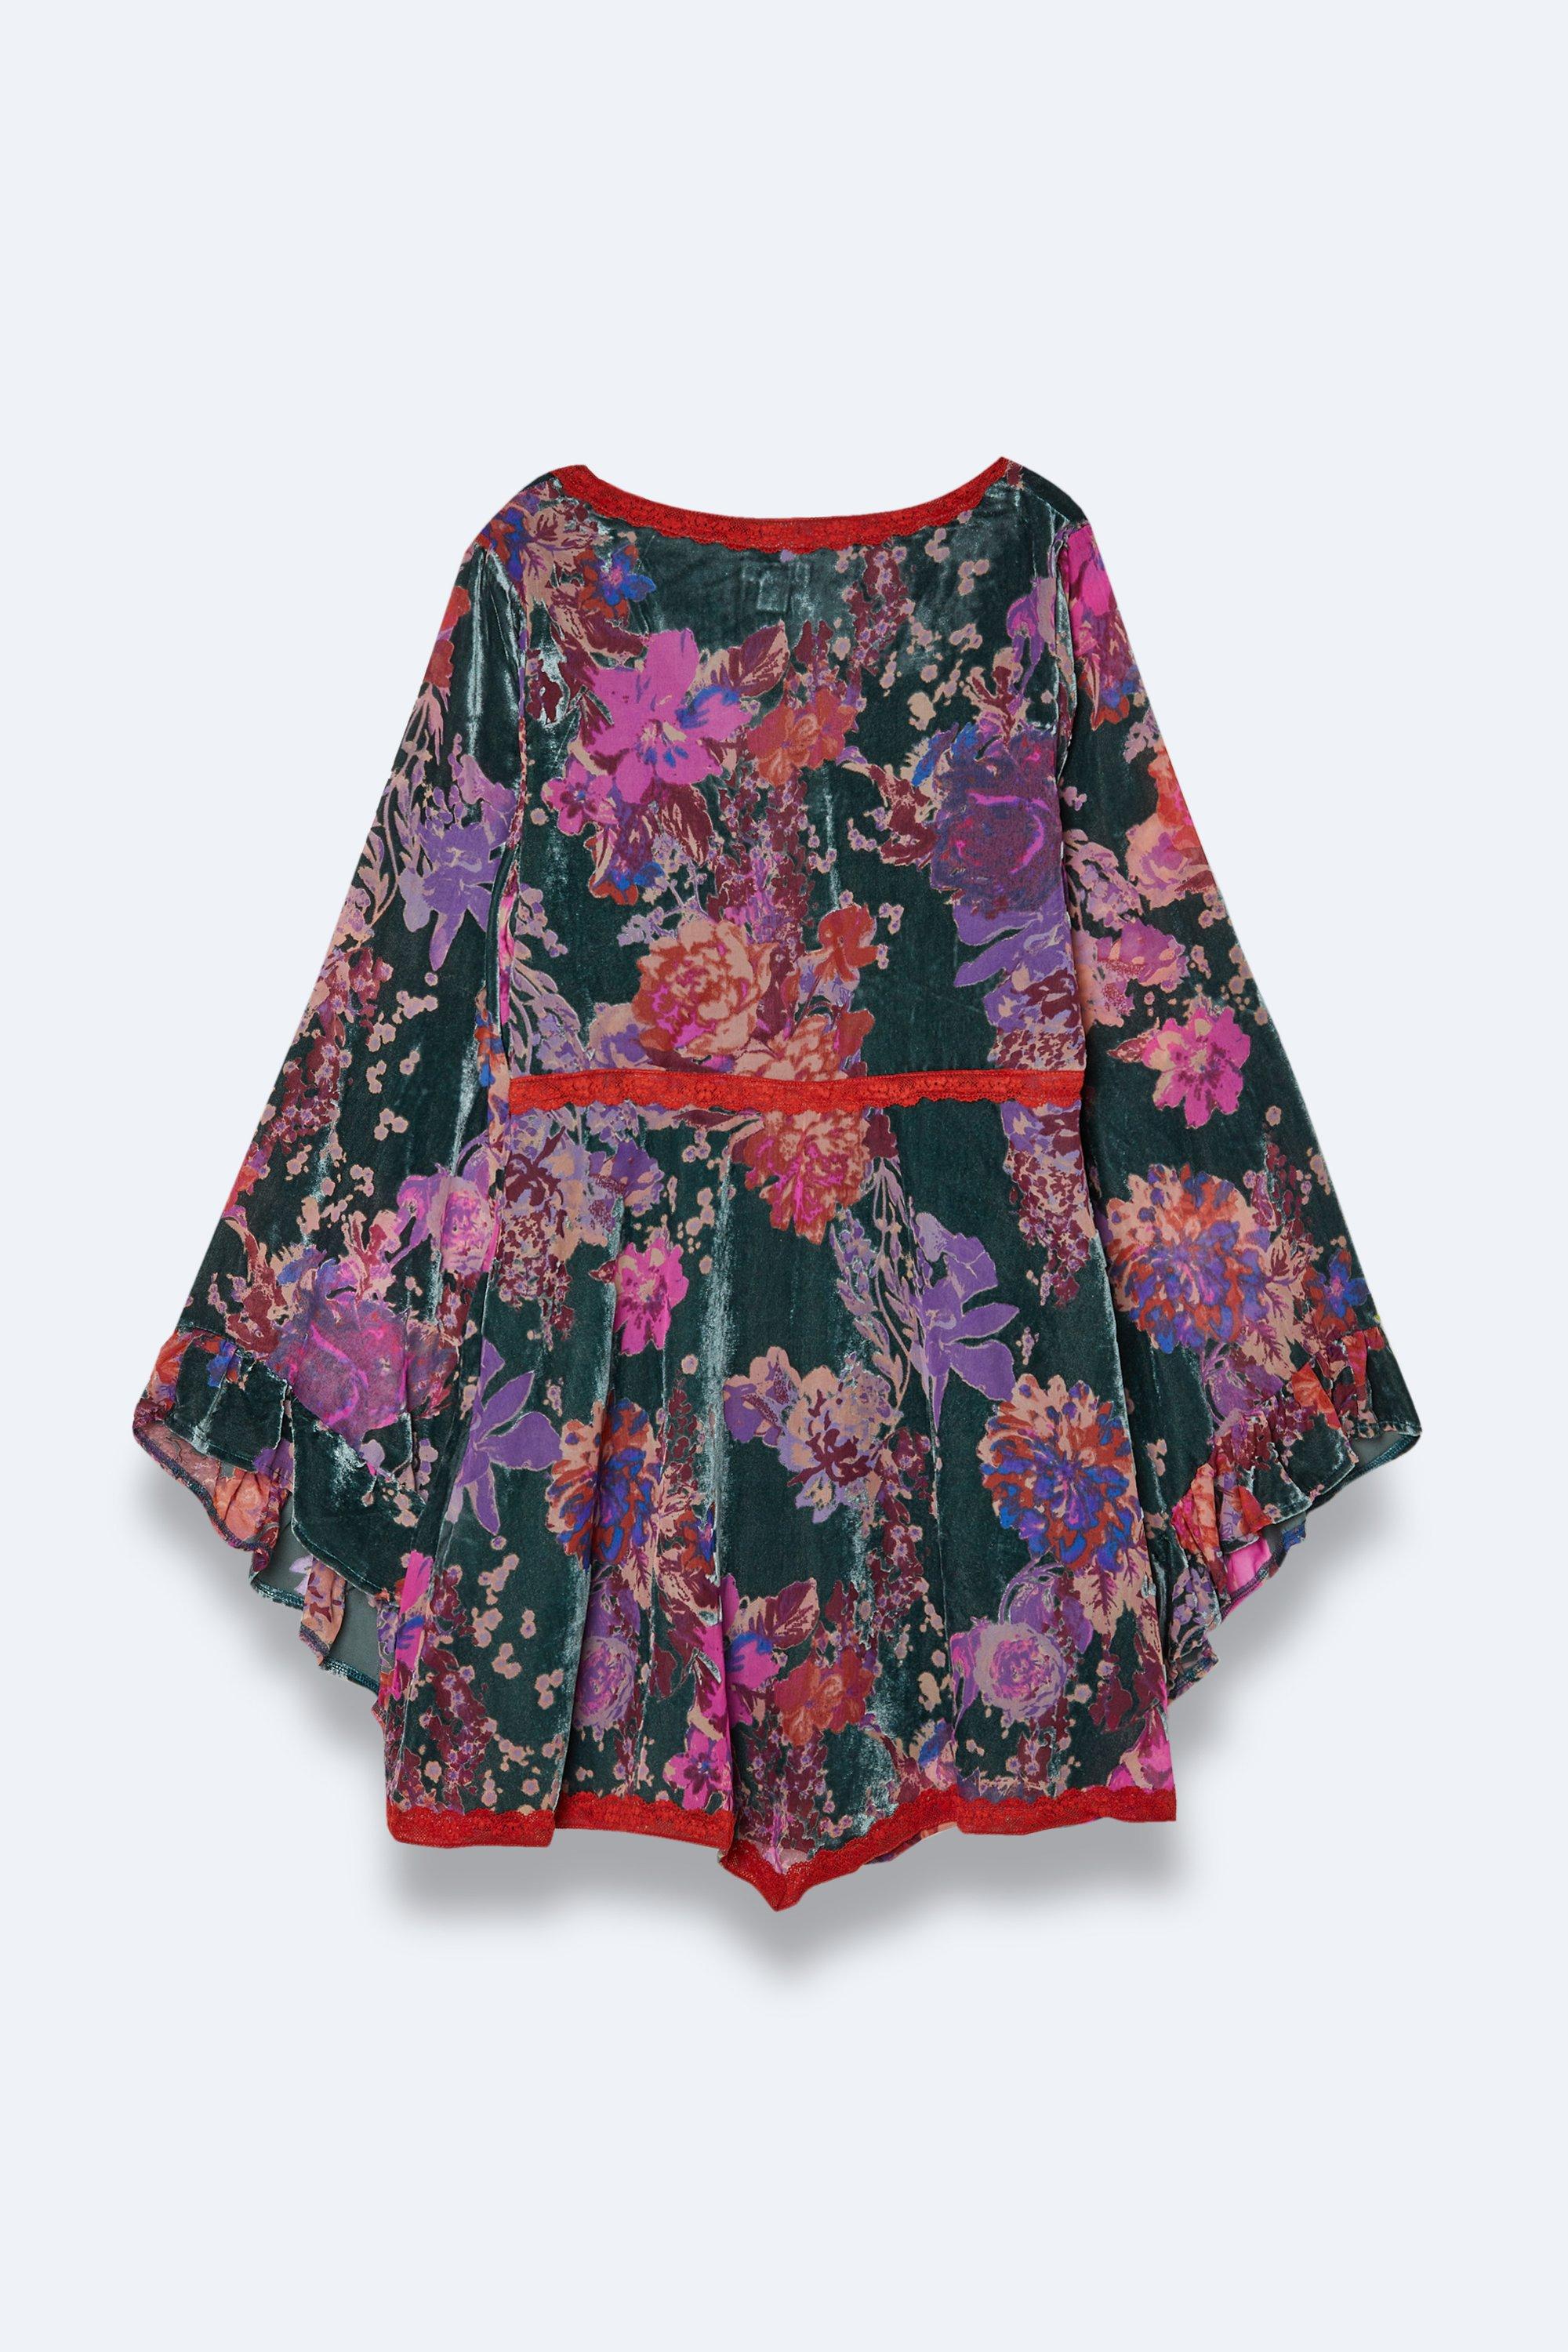 Buy CENG MAU Women's Plus Size Floral Lace Stress Stretchy Bandeau